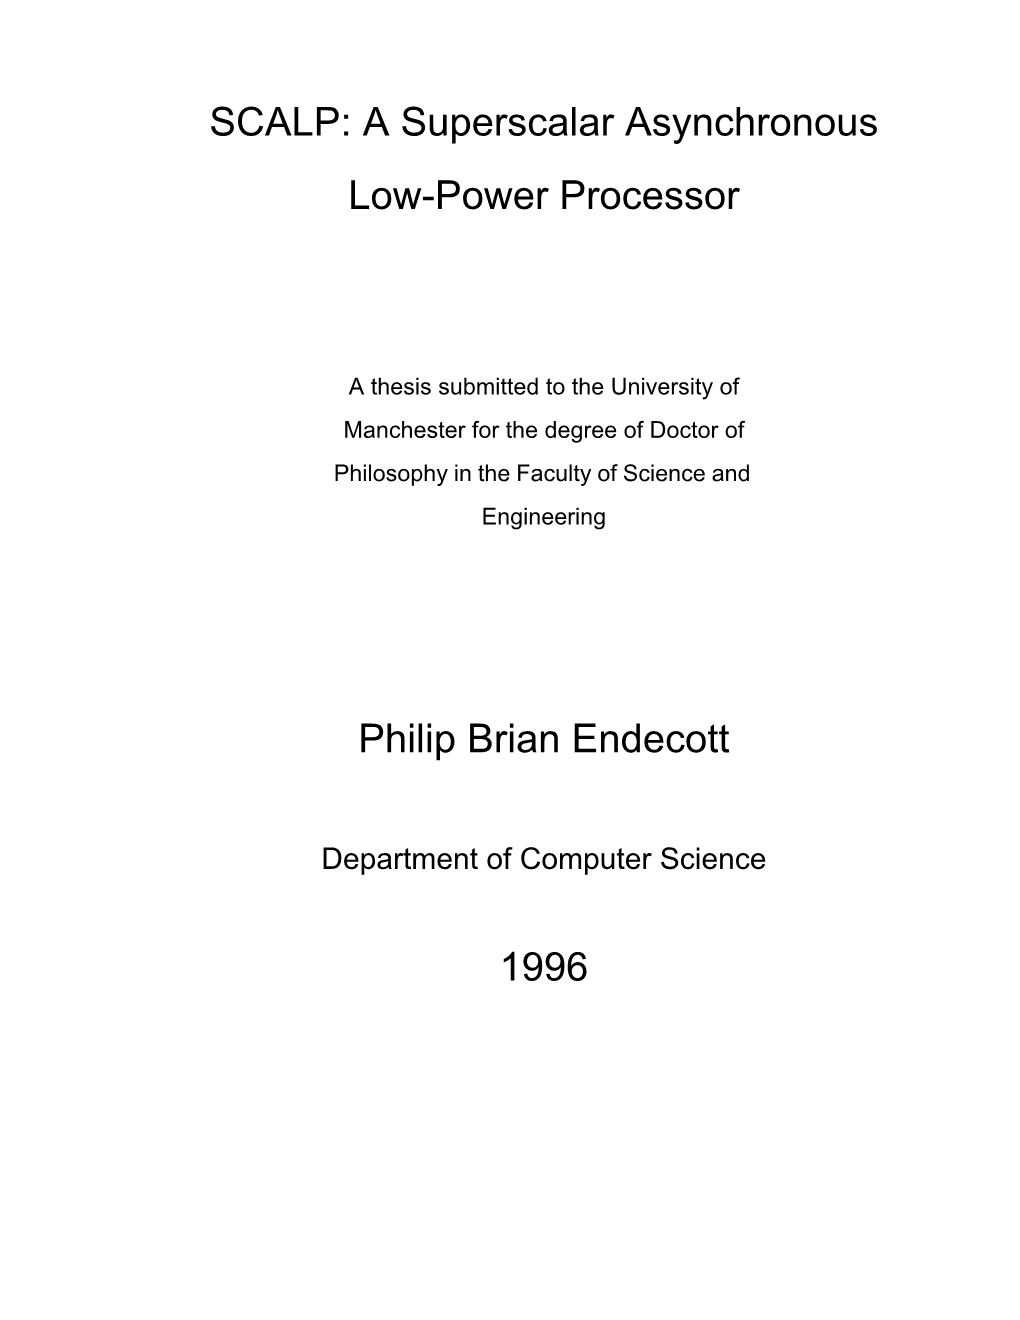 SCALP: a Superscalar Asynchronous Low-Power Processor Philip Brian